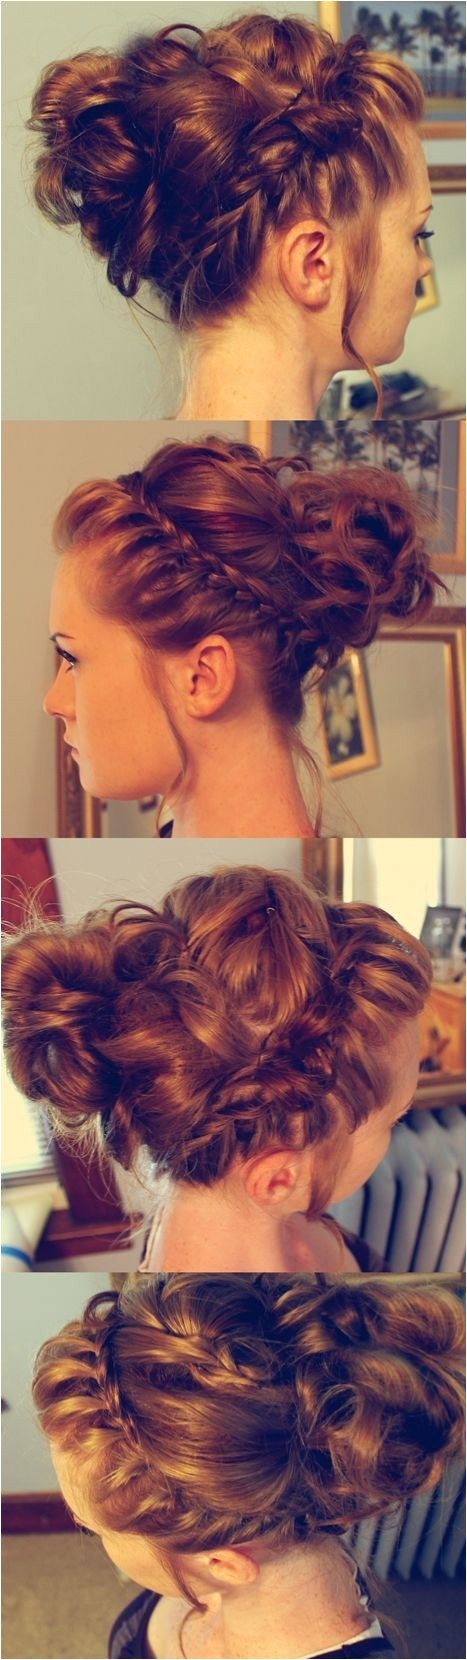 20 pretty braided updo hairstyles